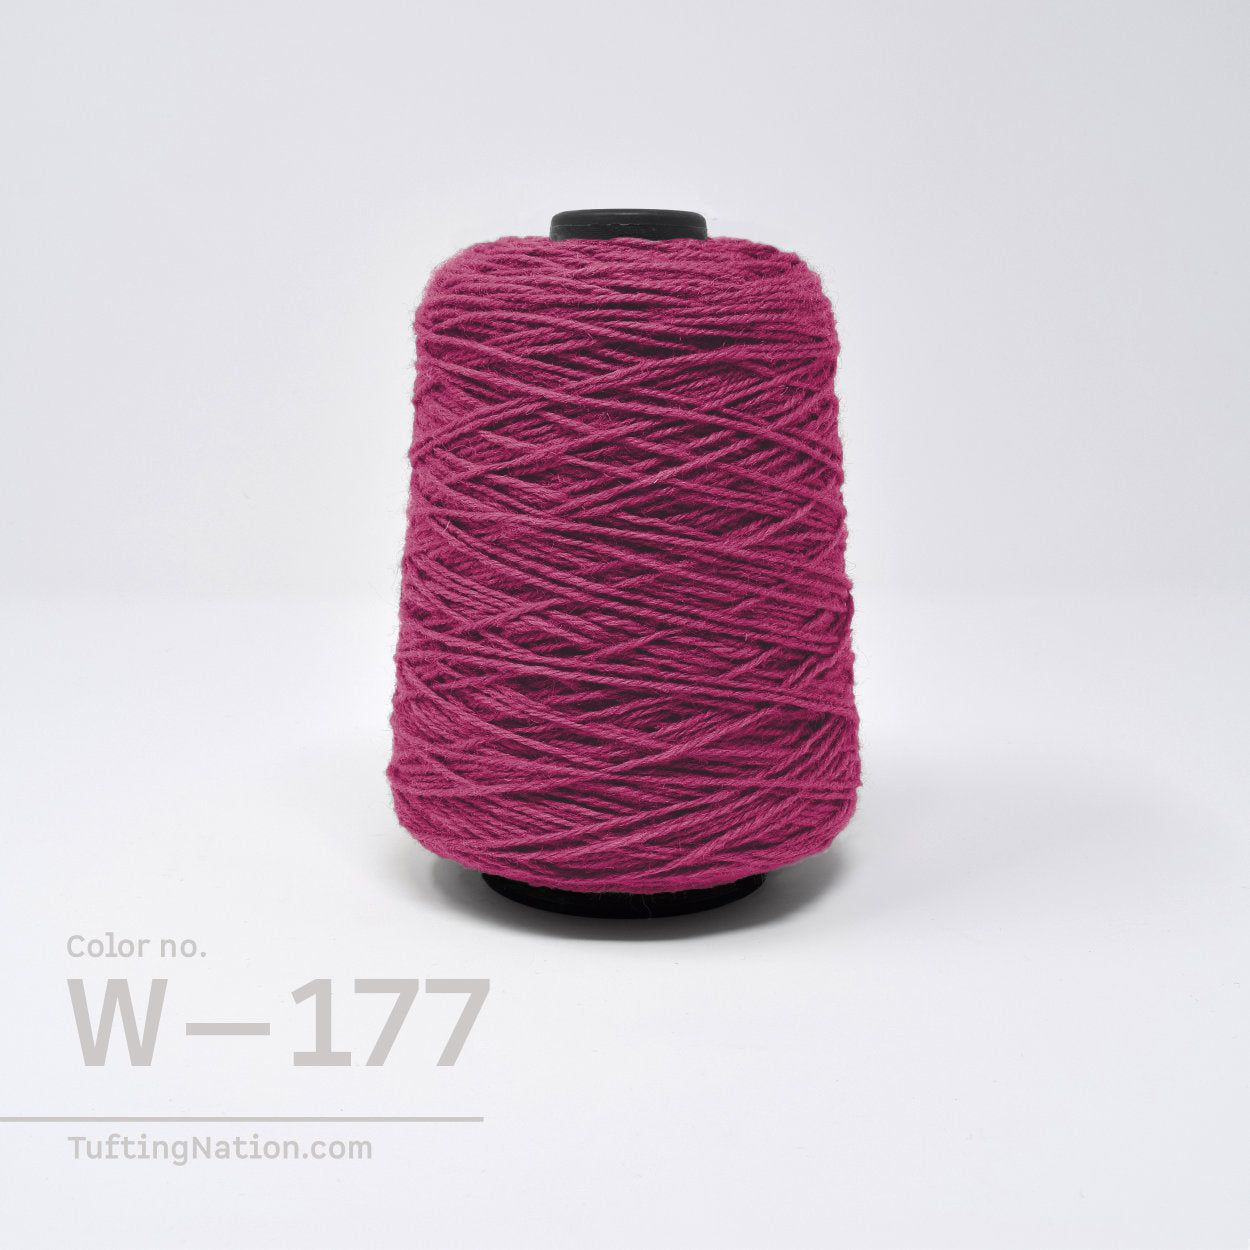 Plum Wool Tufting Yarn on Cones for Rug making | TuftingNation